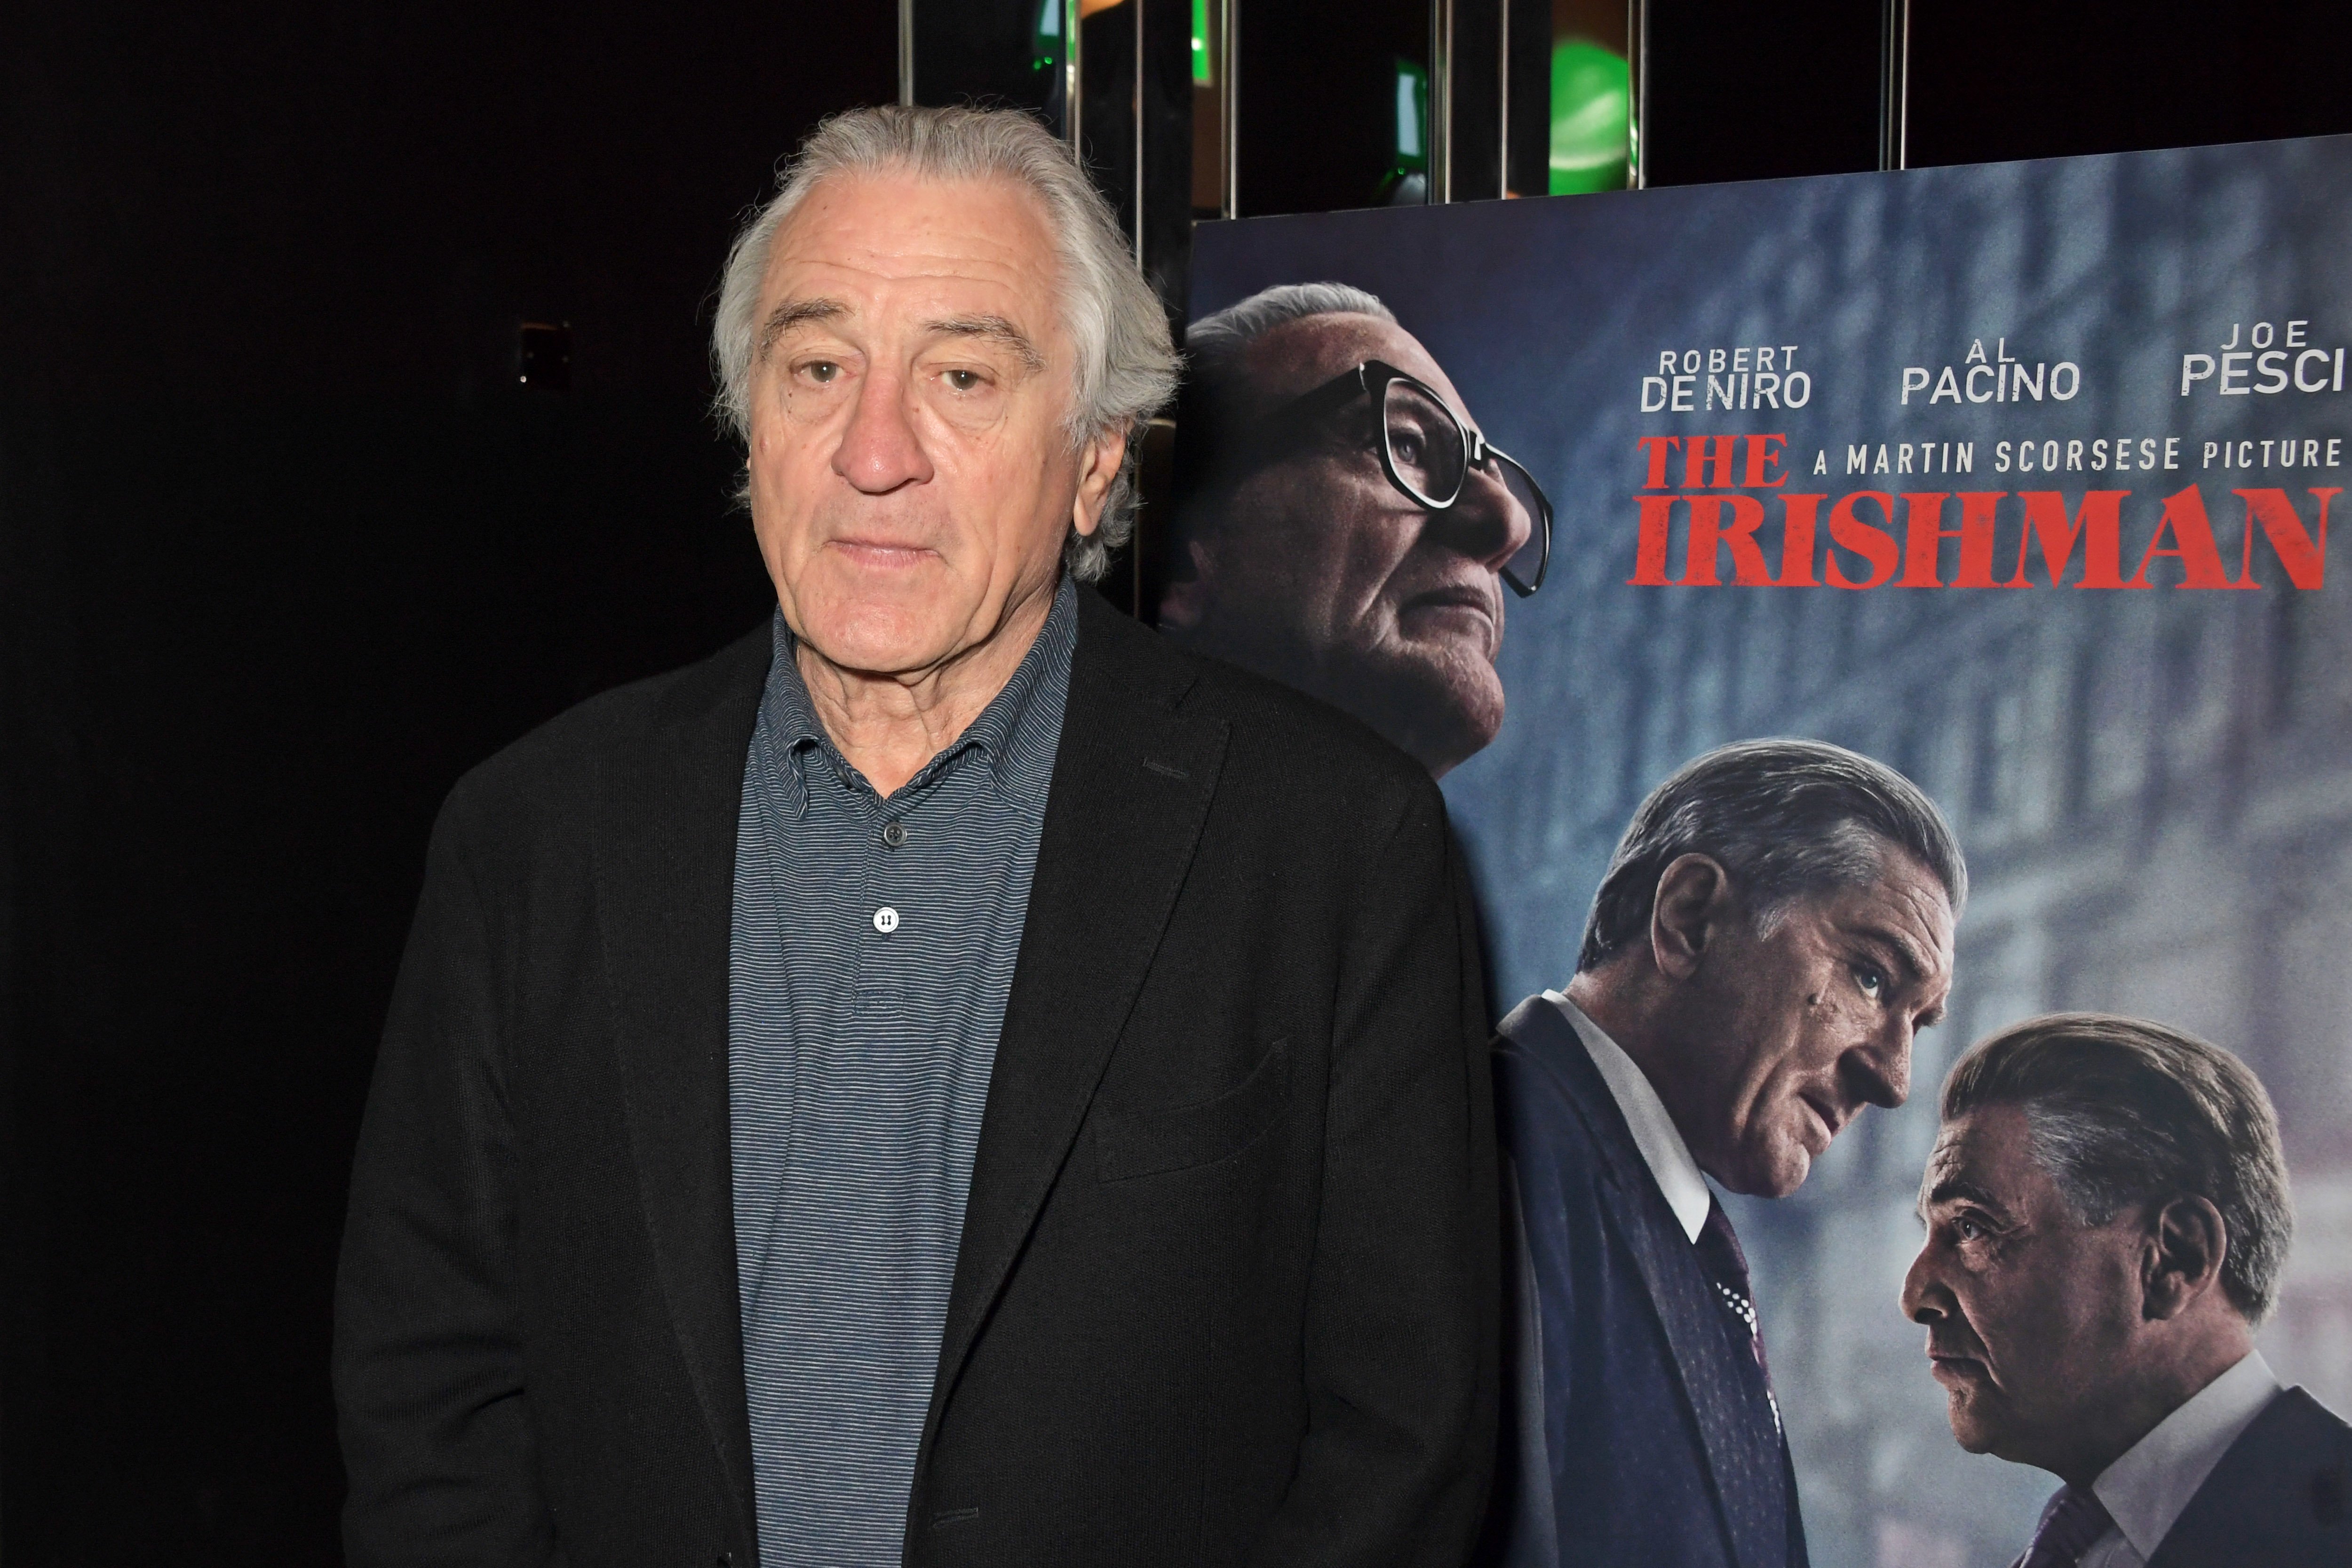 Robert De Niro at a screening of "The Irishman" in London on December 18, 2019 | Source: Getty Images